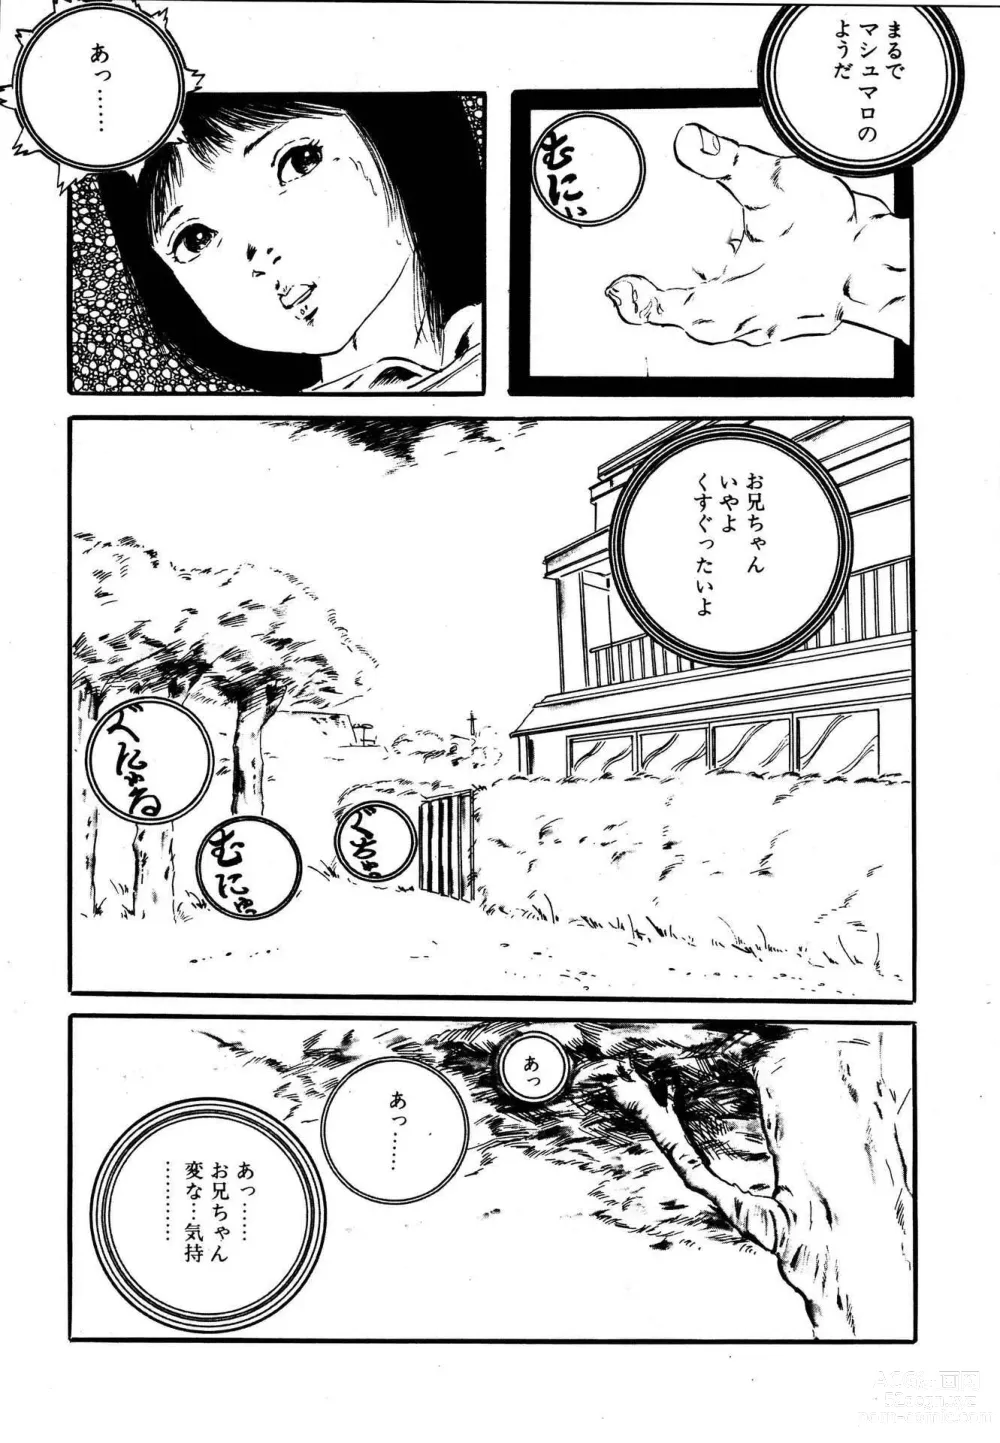 Page 186 of manga Dreaming fairy